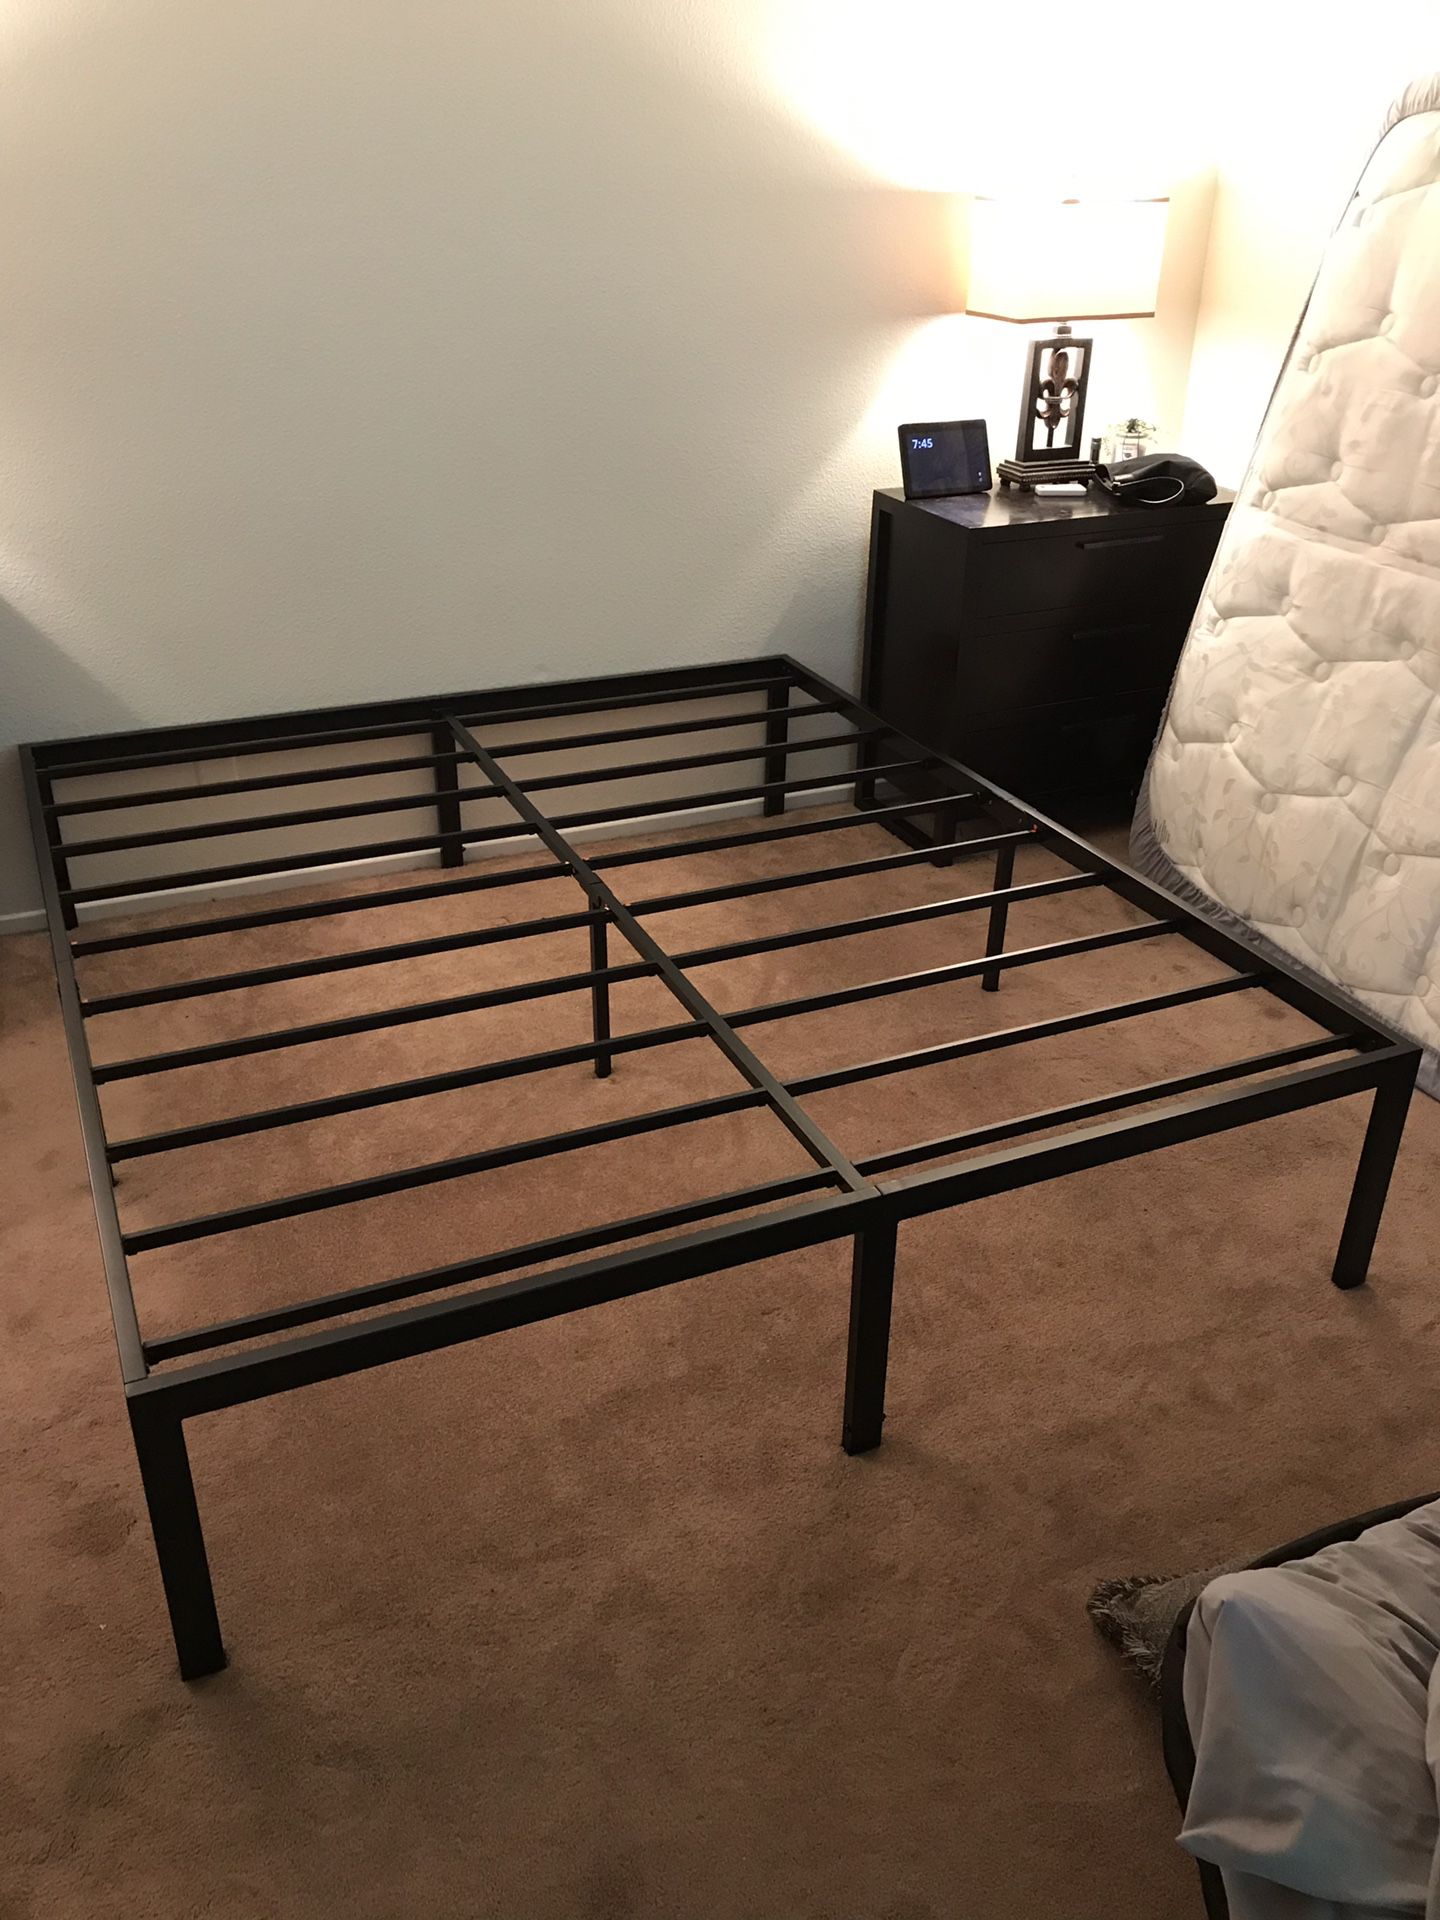 Cal King Bed Frame